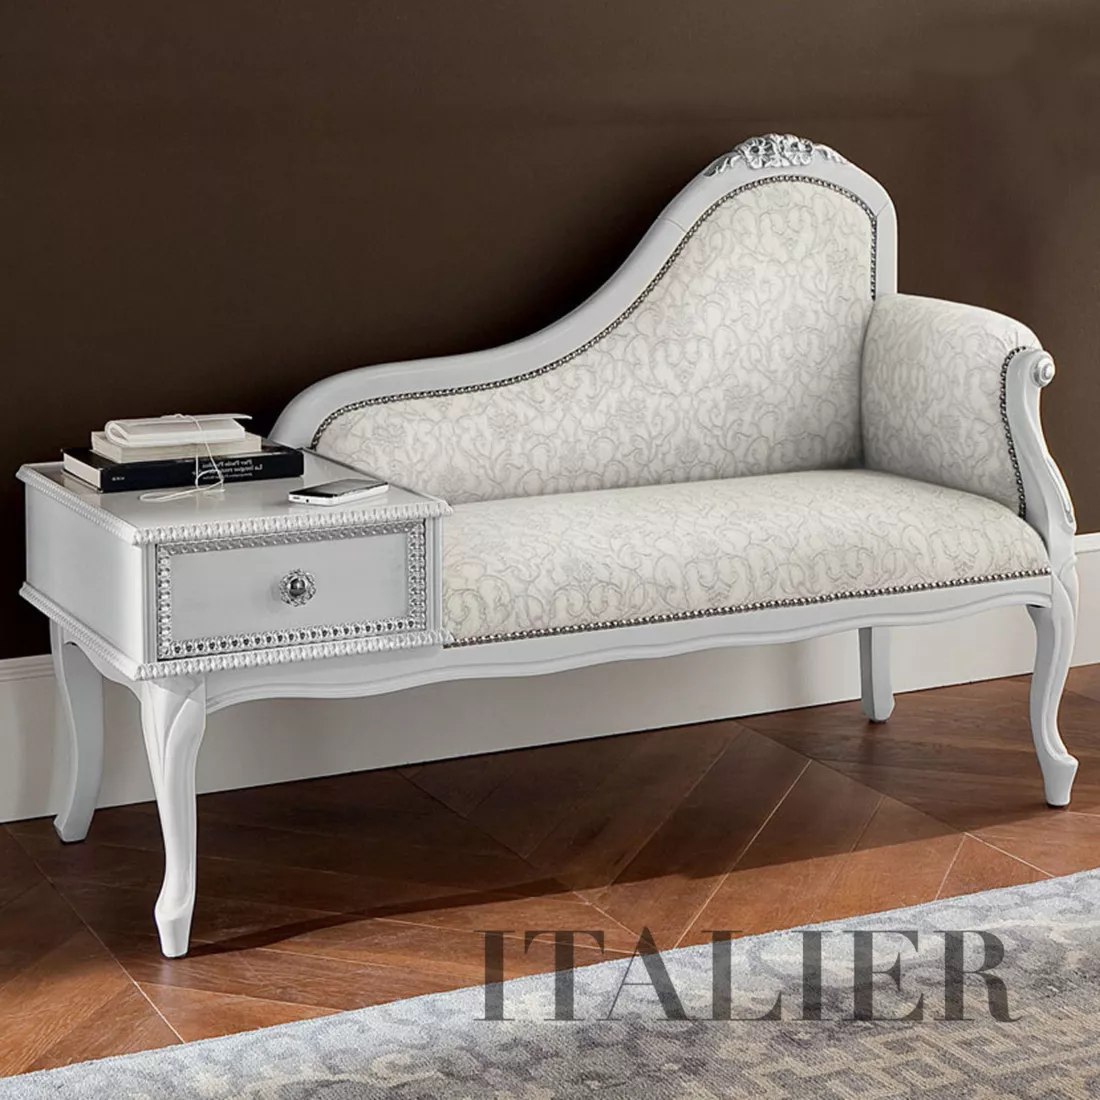 Little-upholstered-sofa-with-phone-stand-hardwood-Bella-Vita-collection-Modenese-Gastonegukizfjthr - kopie